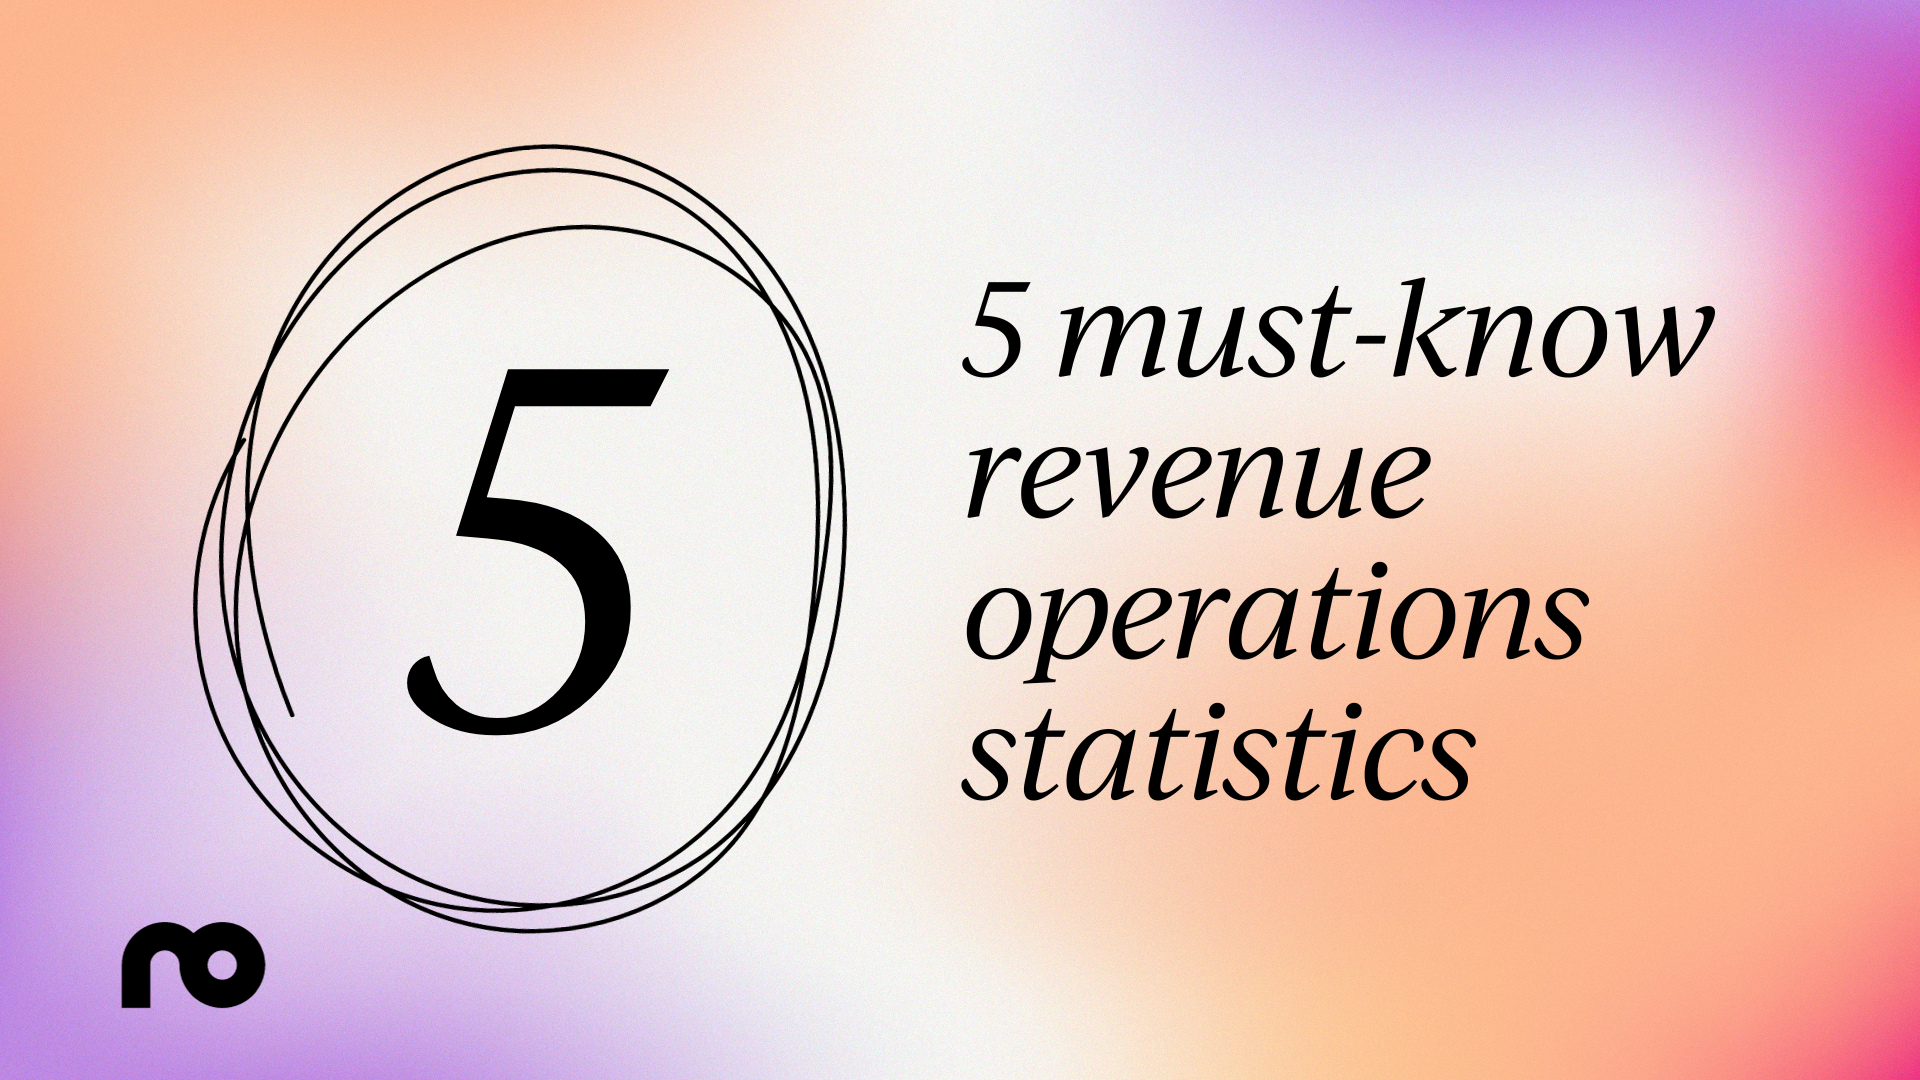 5 must-know revenue operations statistics